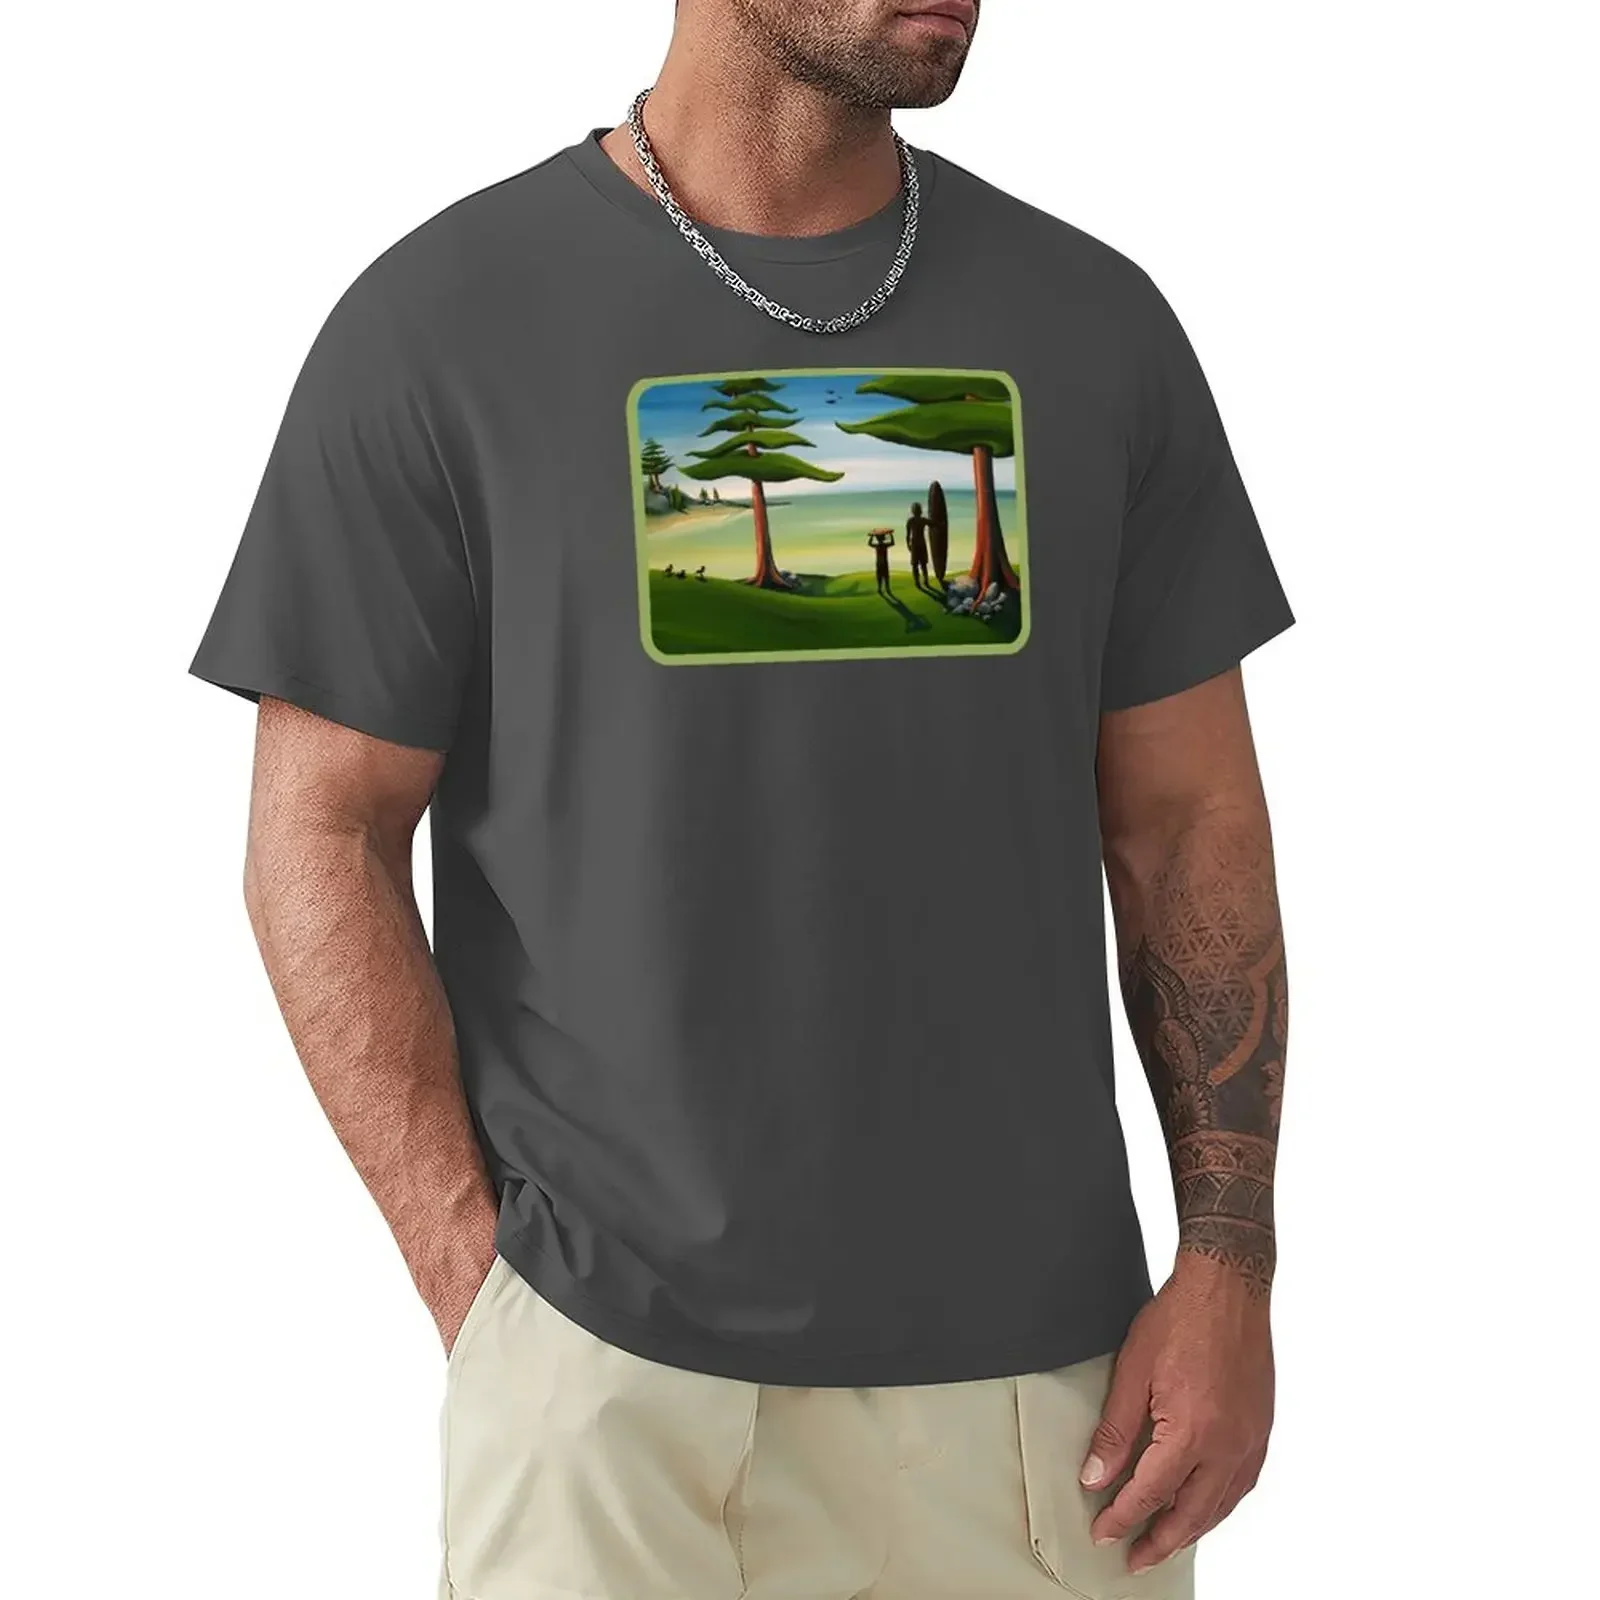 

Beach Bros Shirt T-Shirt customizeds for a boy graphics Men's clothing anime blacks tees men clothes